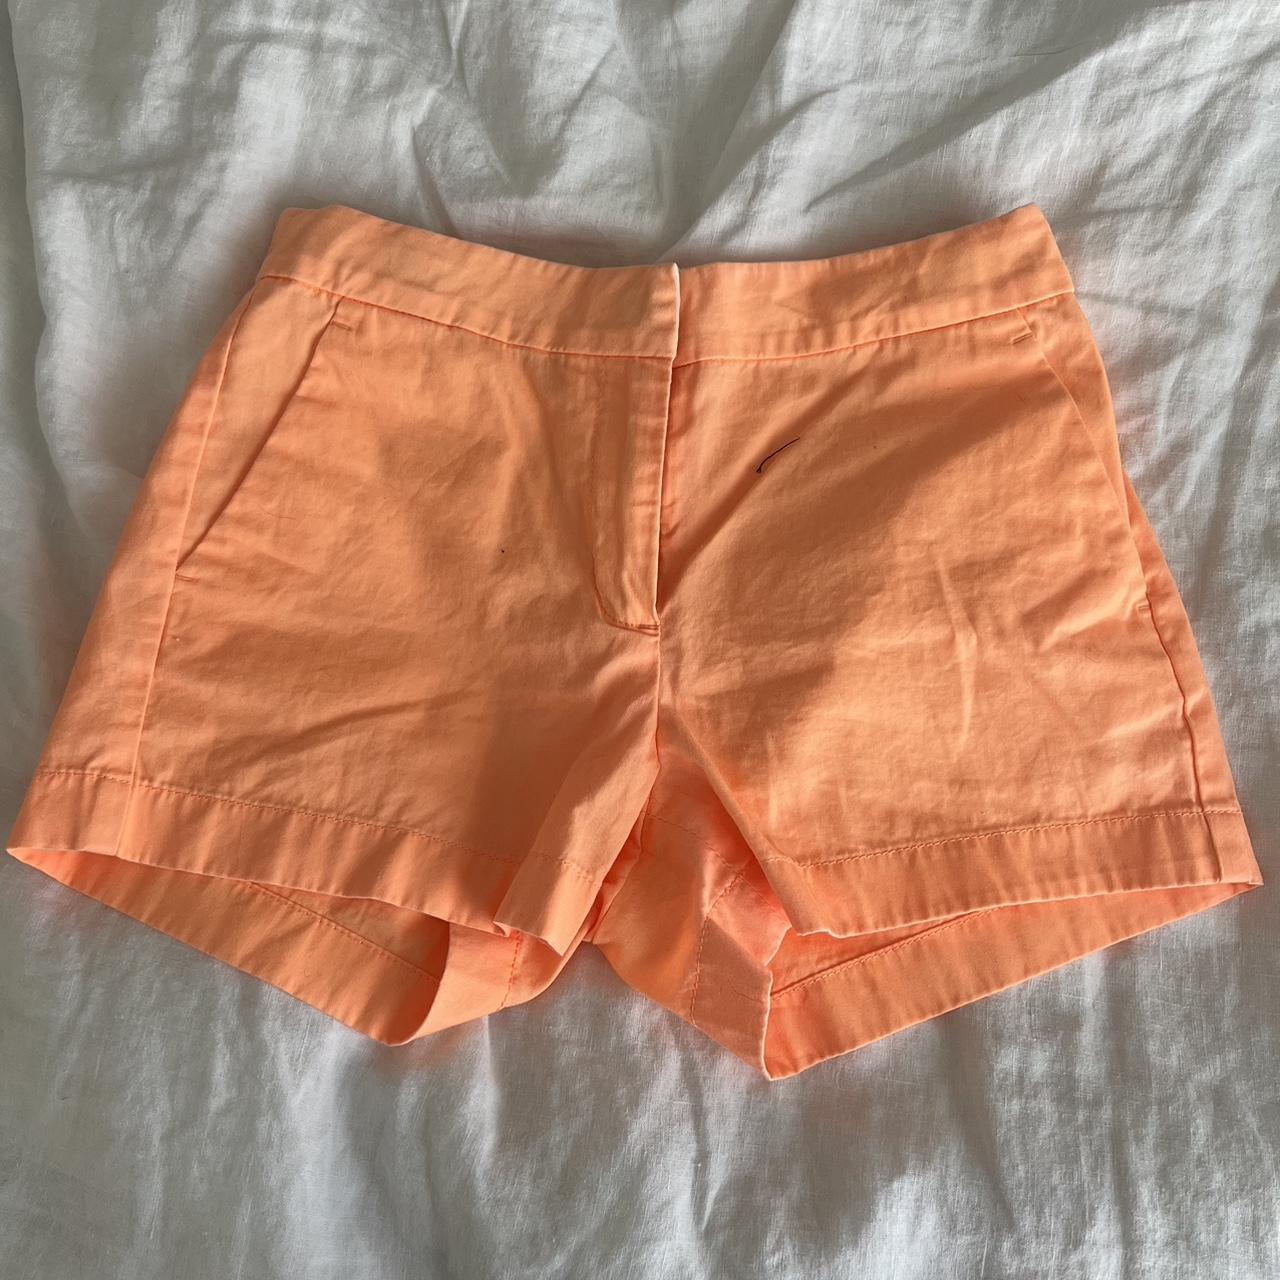 Crewcuts by J.Crew Orange Shorts